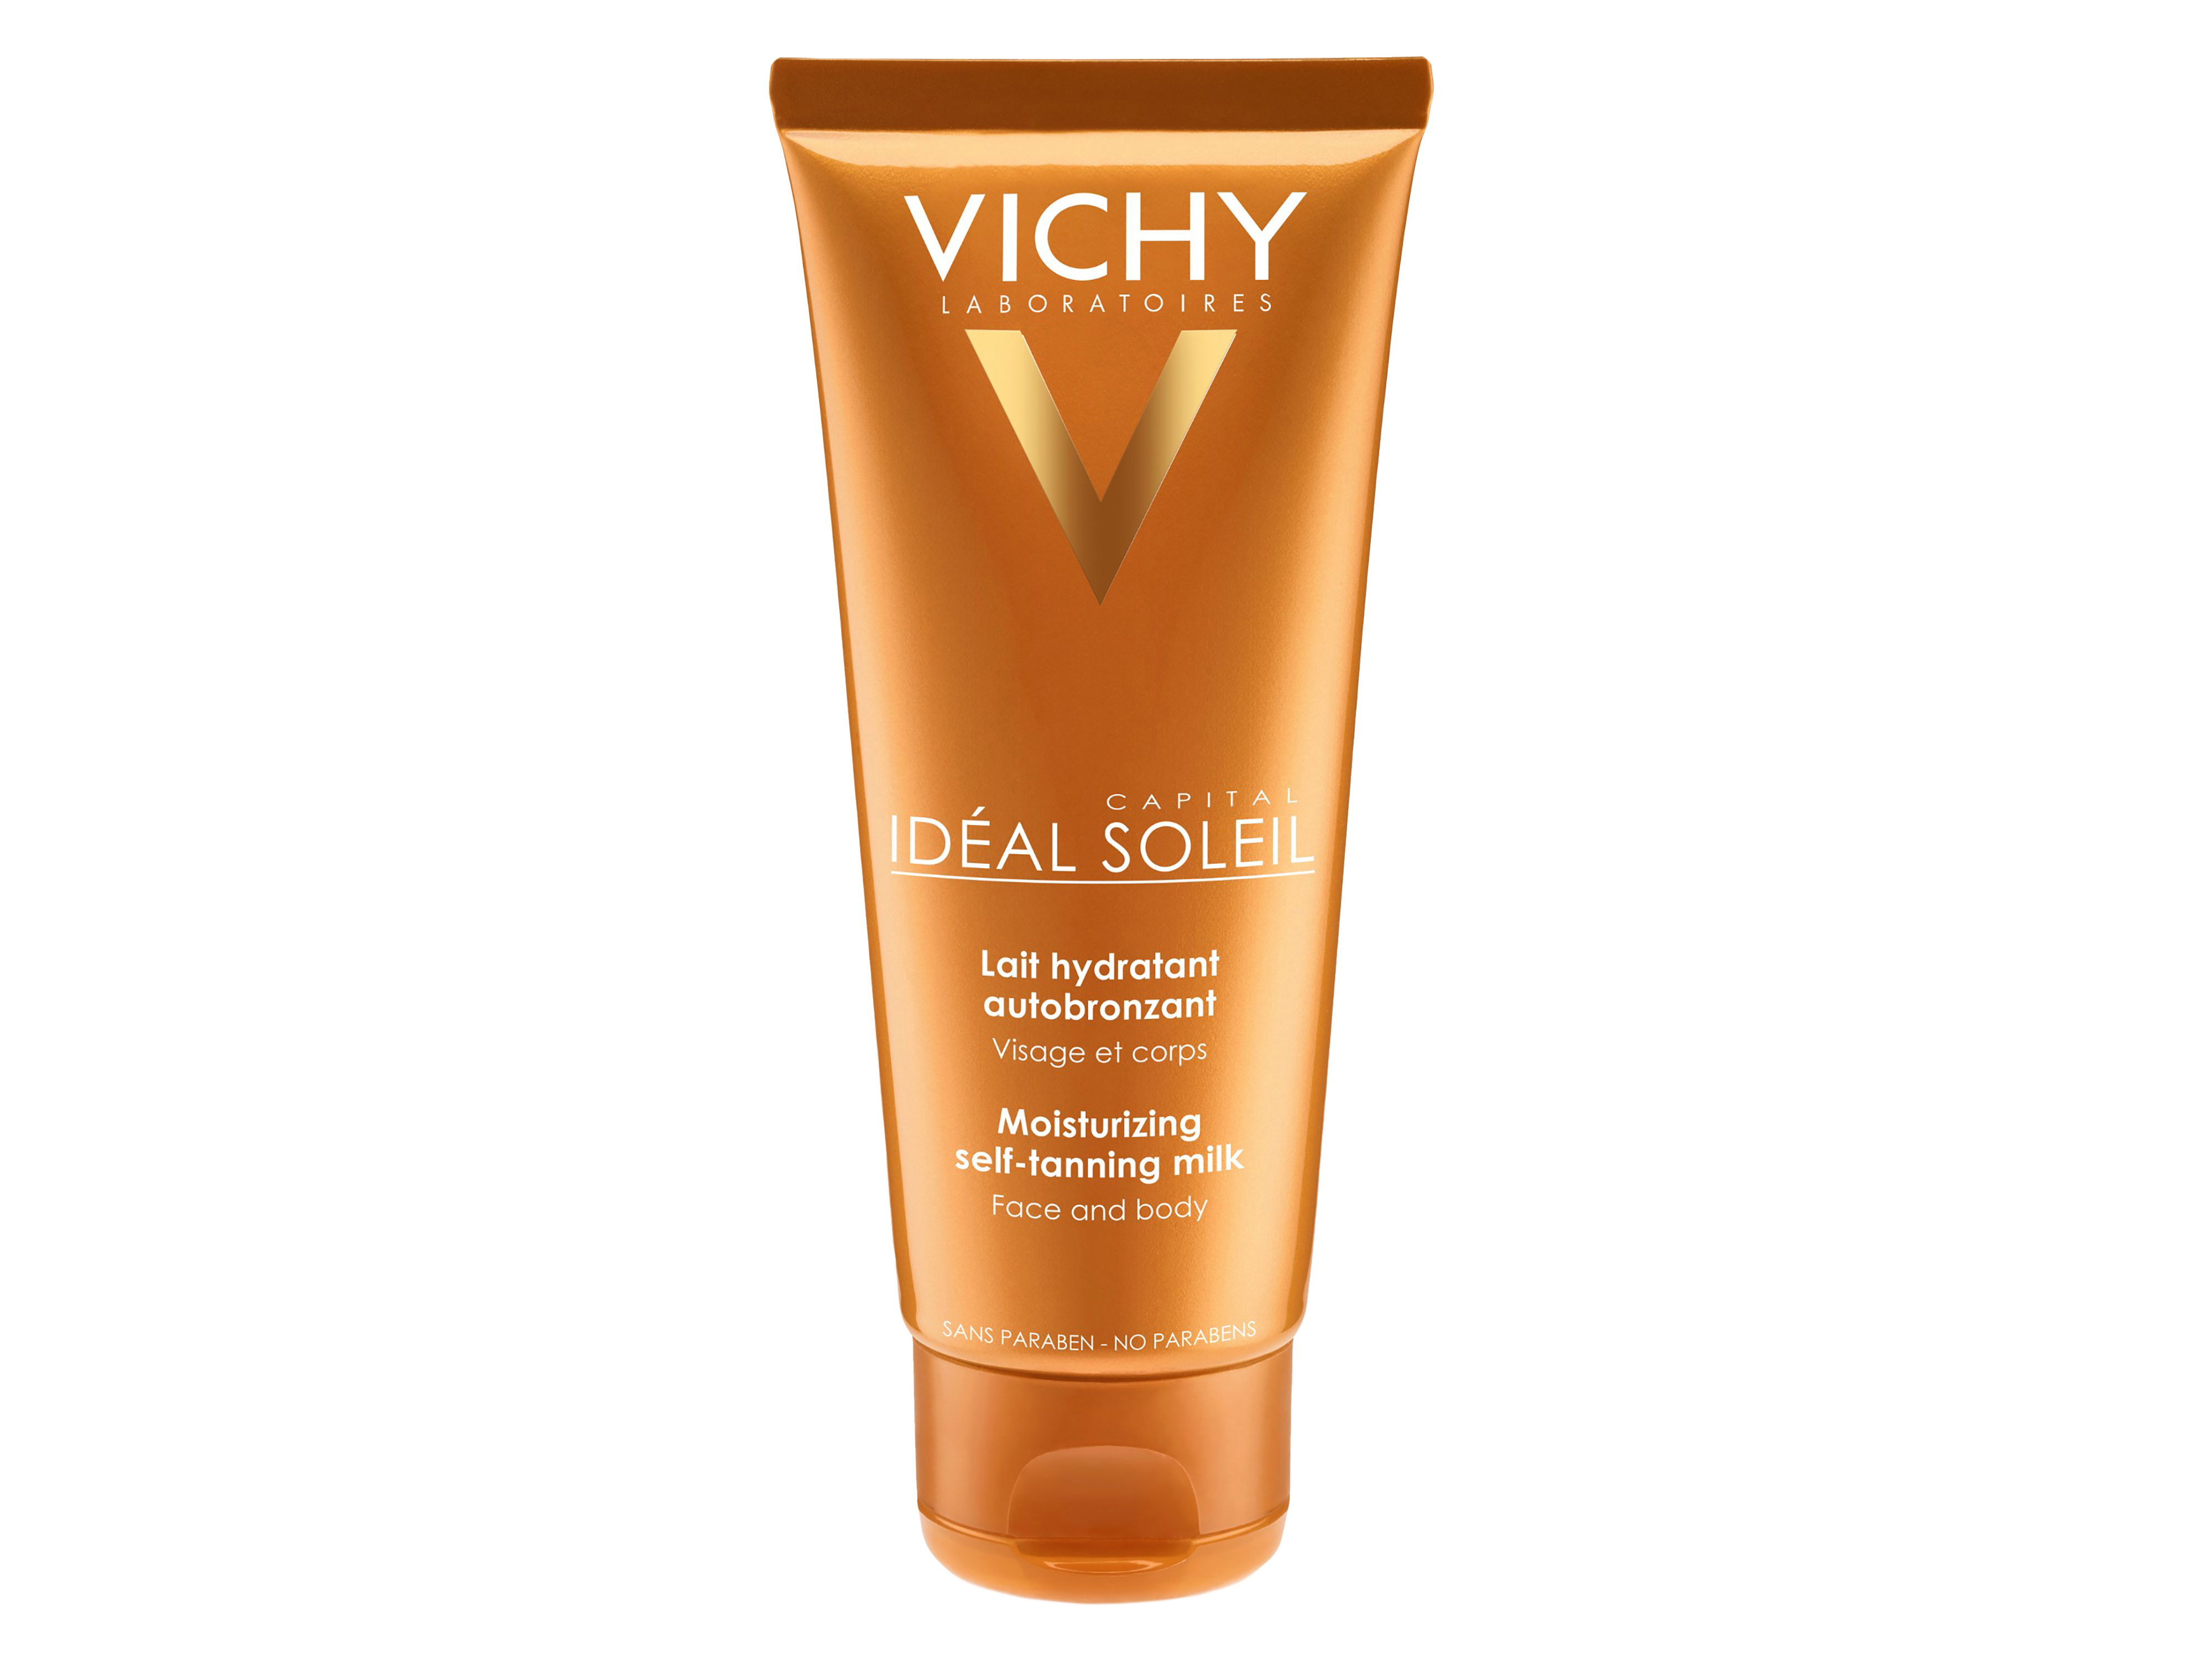 Vichy Vichy Ideal Soleil Self-Tanning Milk, 100